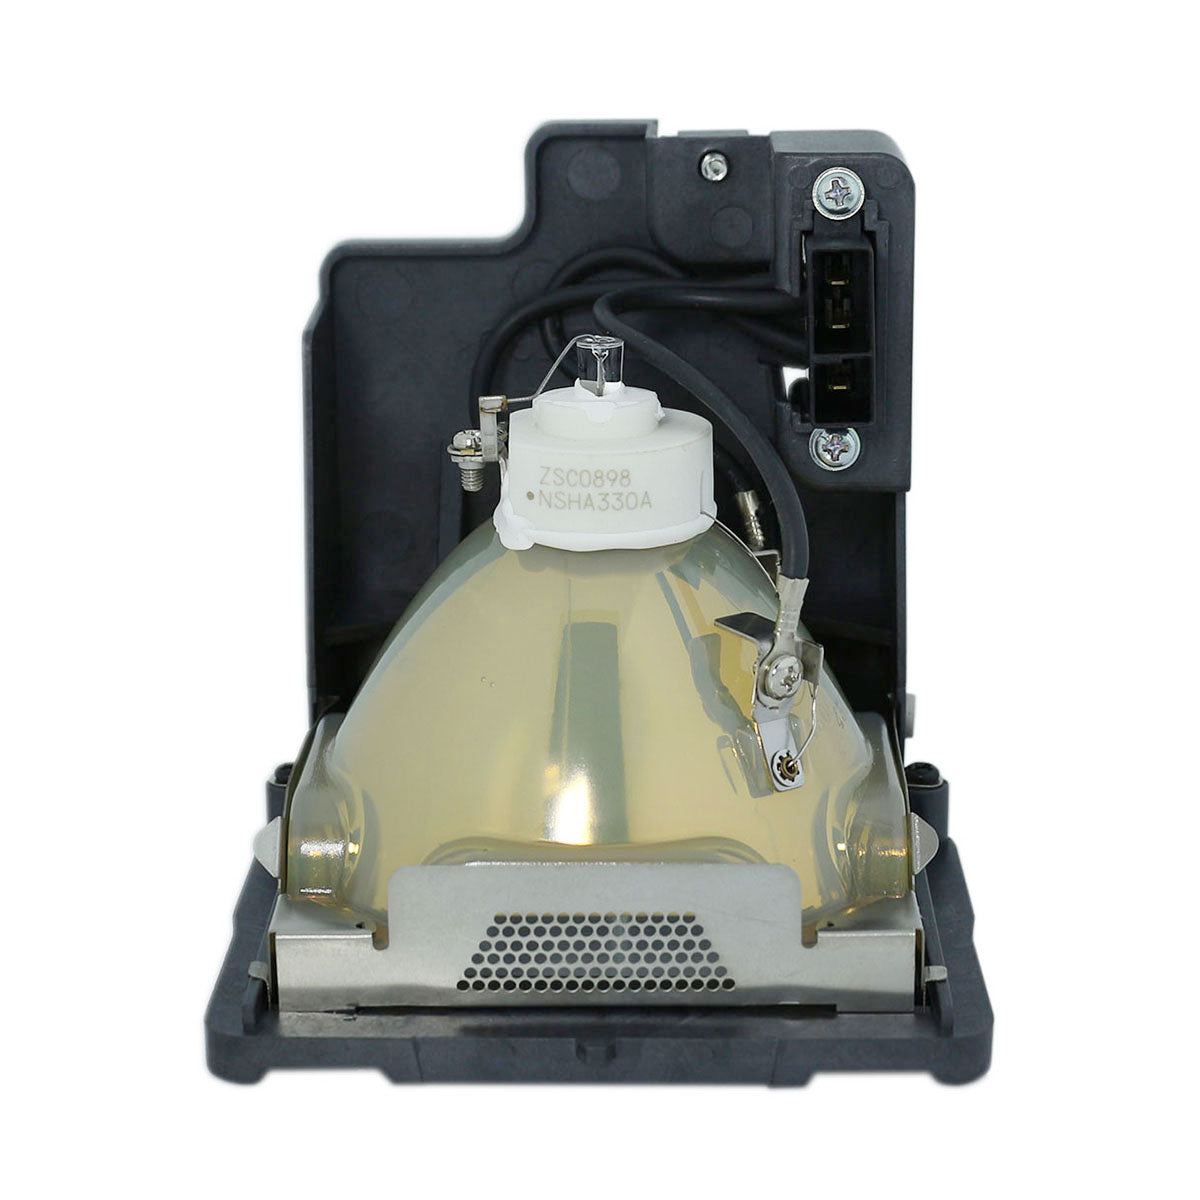 Panasonic ET-SLMP109 Ushio Projector Lamp Module